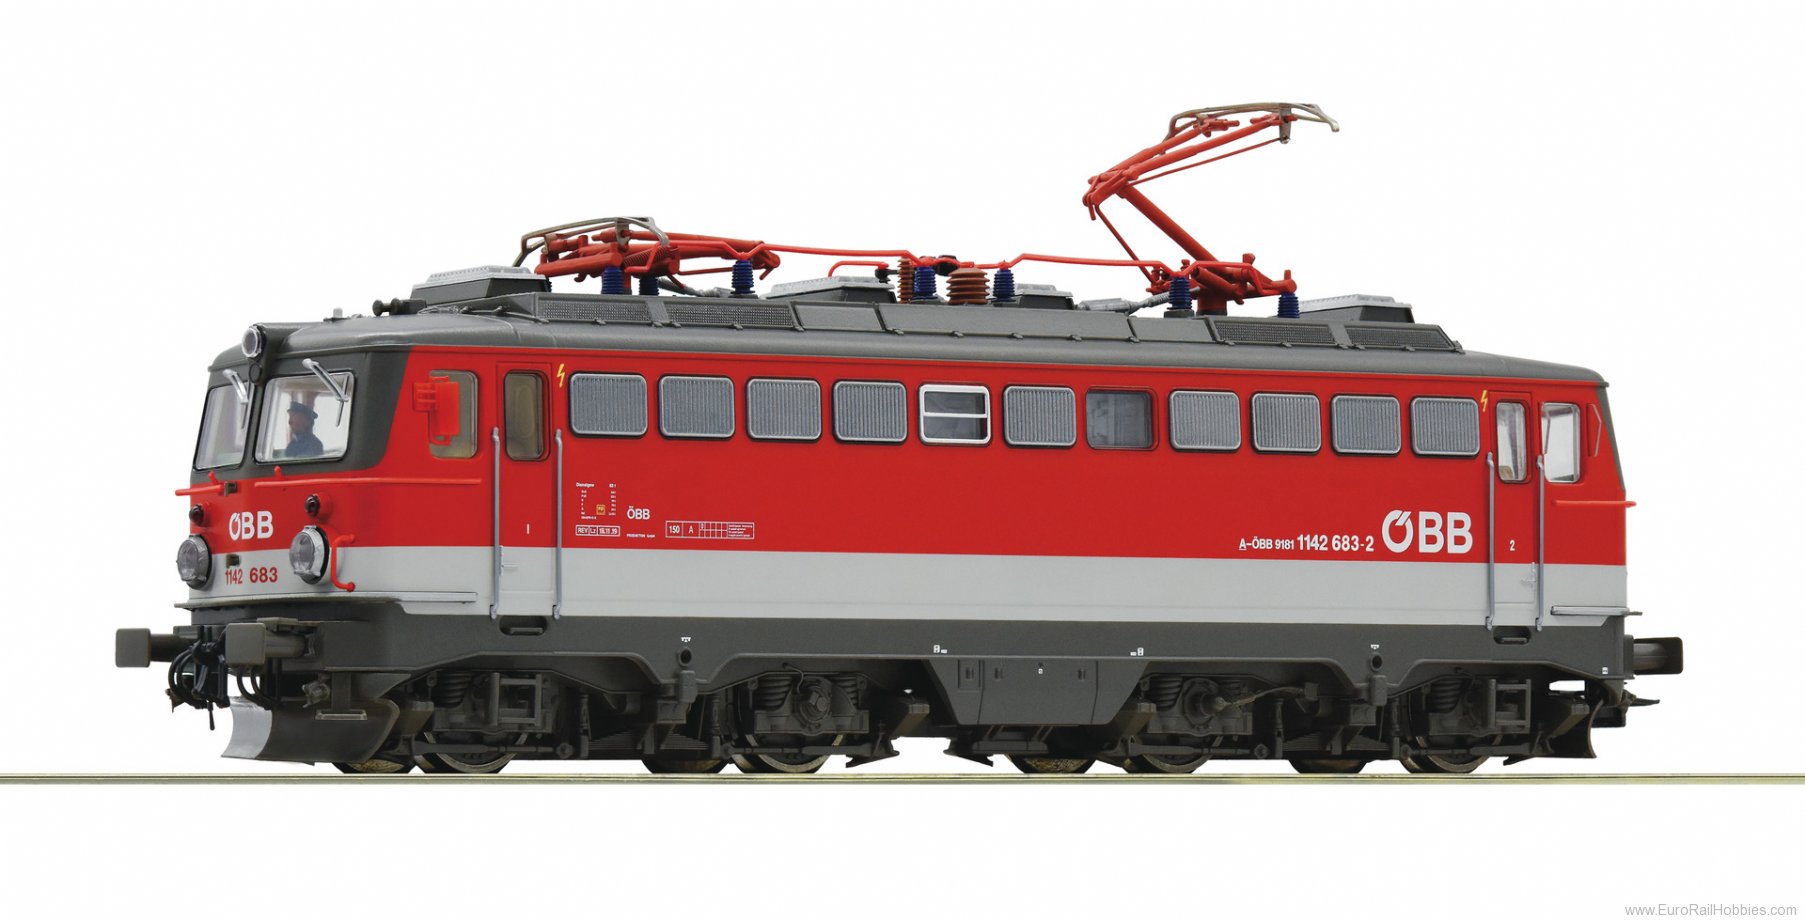 Roco 73610 ÃBB Electric locomotive 1142 683-2 